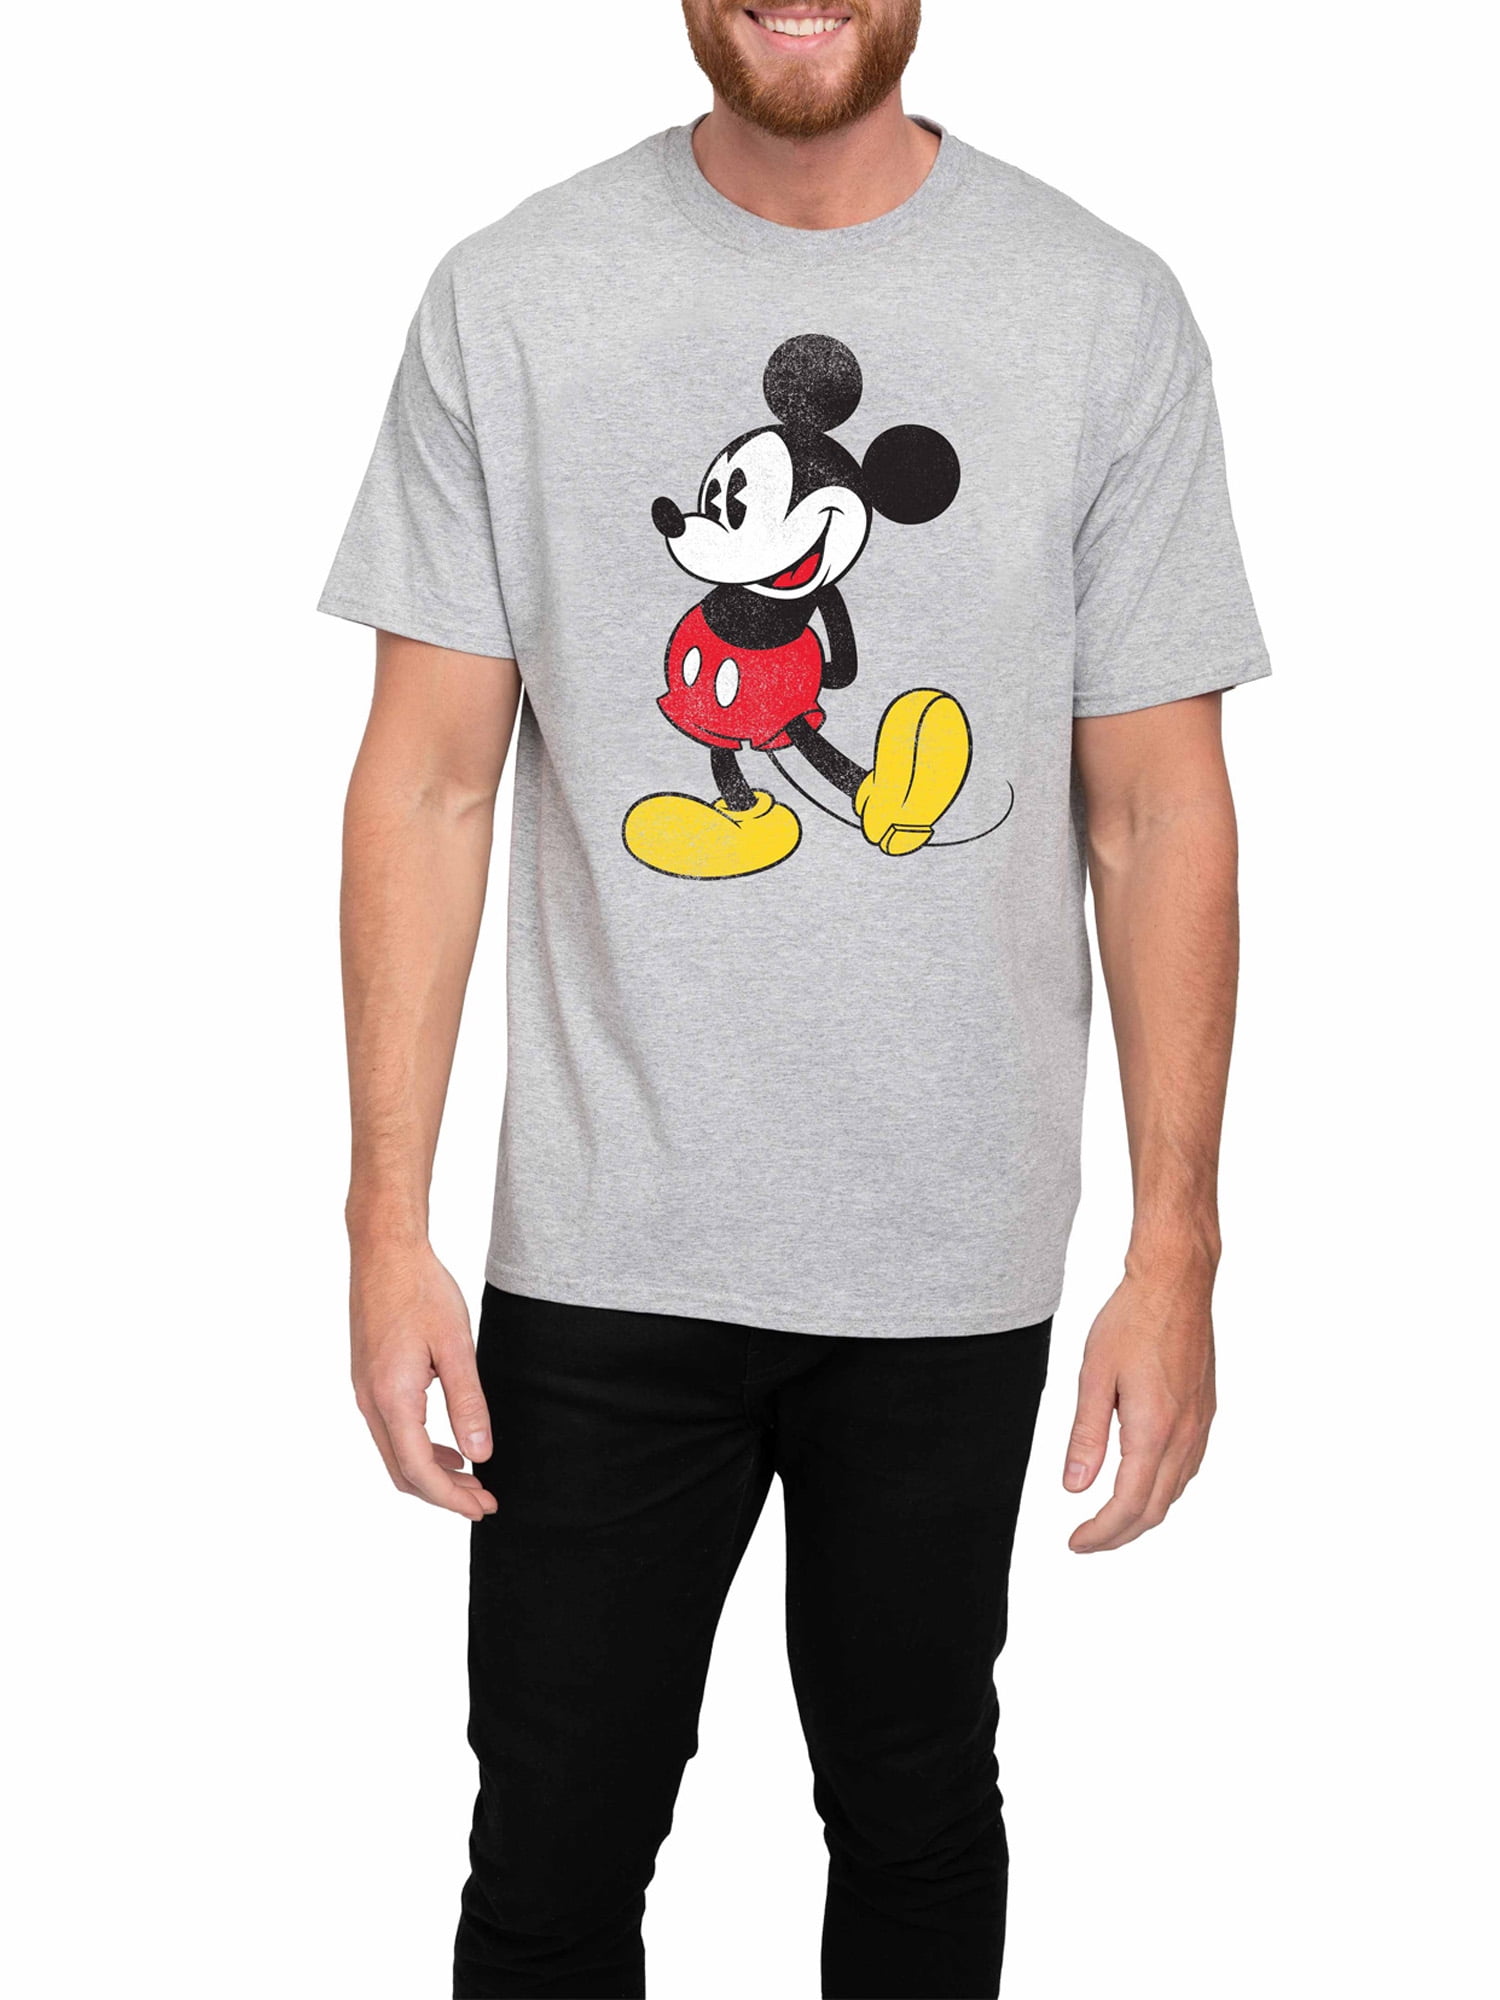 Mickey Mouse Kick Official Disney Classic Mickey & Minnie Grey Mens T-shirt